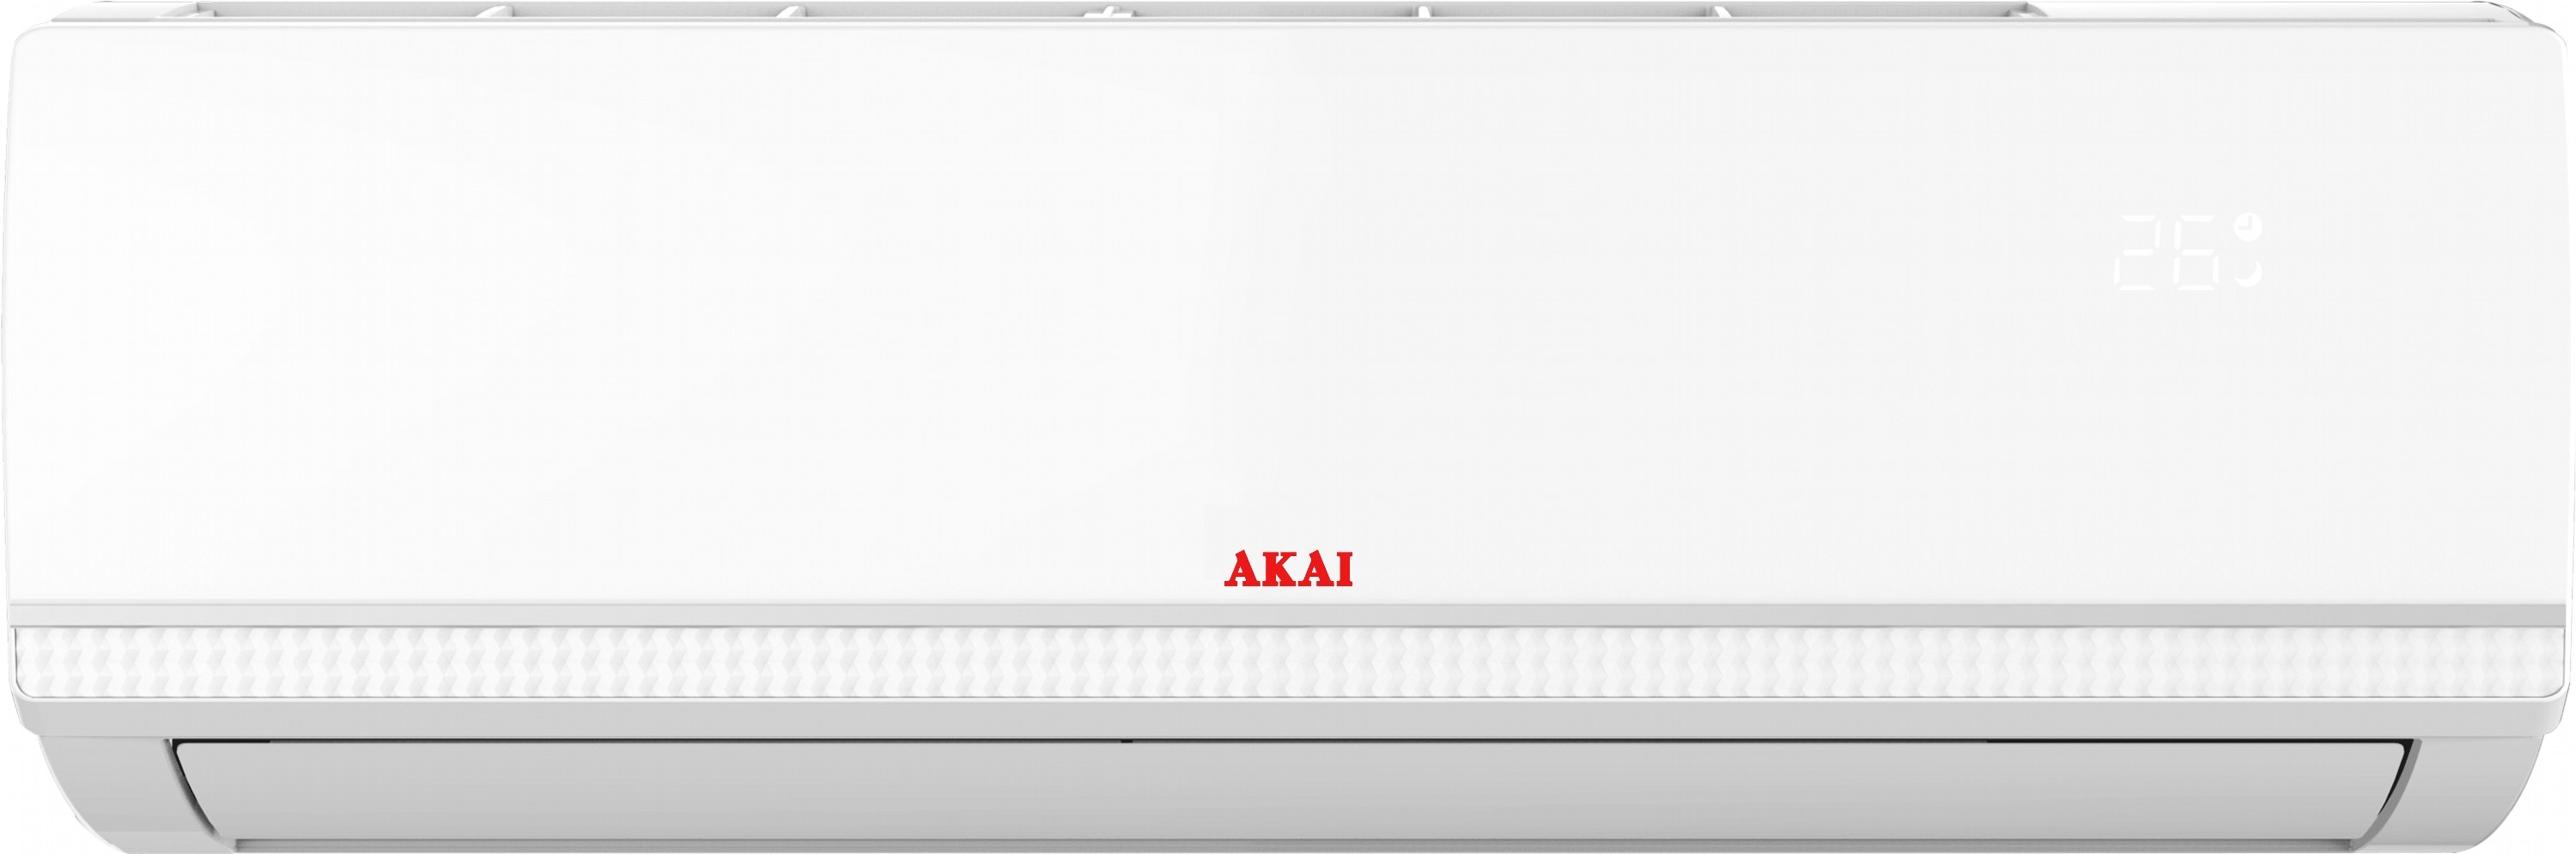 Кондиционер сплит-система Akai AK-AC1210-OF цена 10999.00 грн - фотография 2